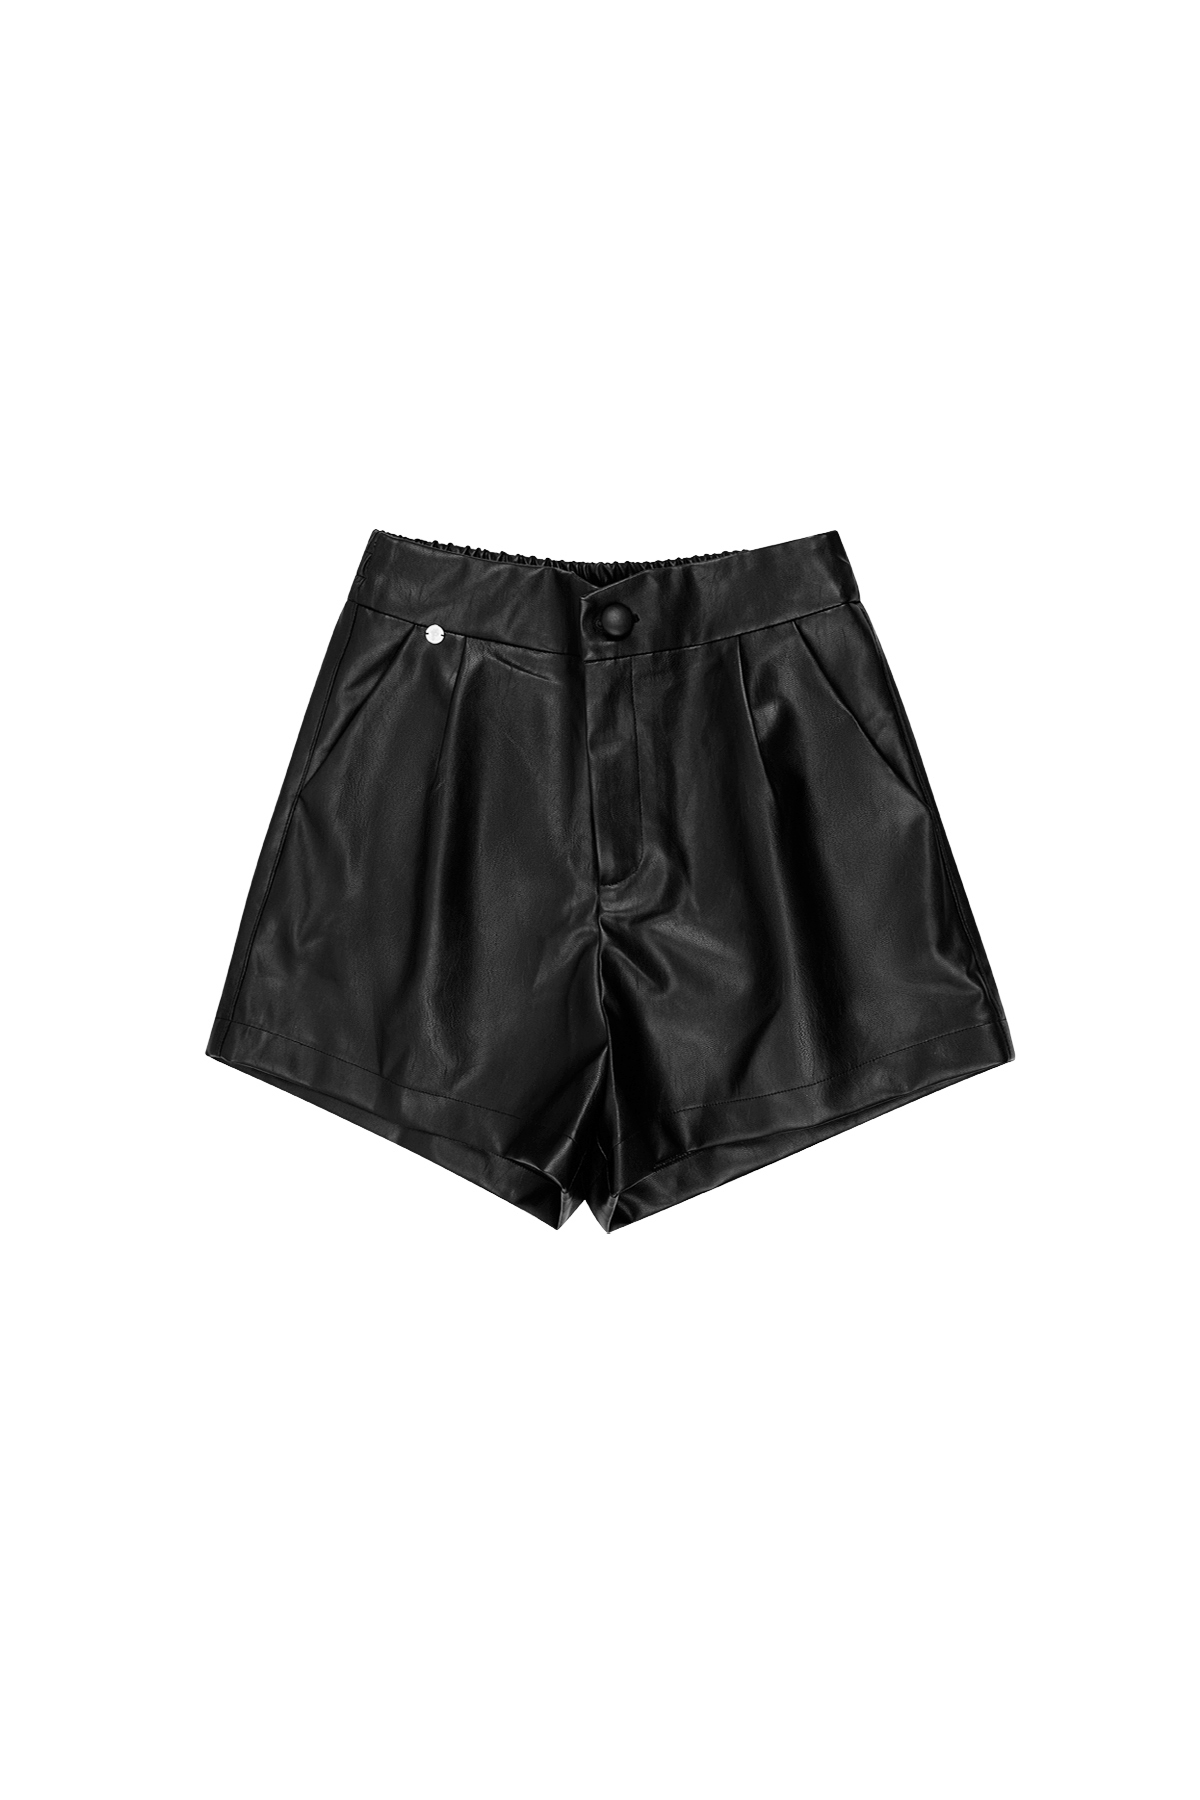 Shorts de cintura alta de cuero PU - negro h5 